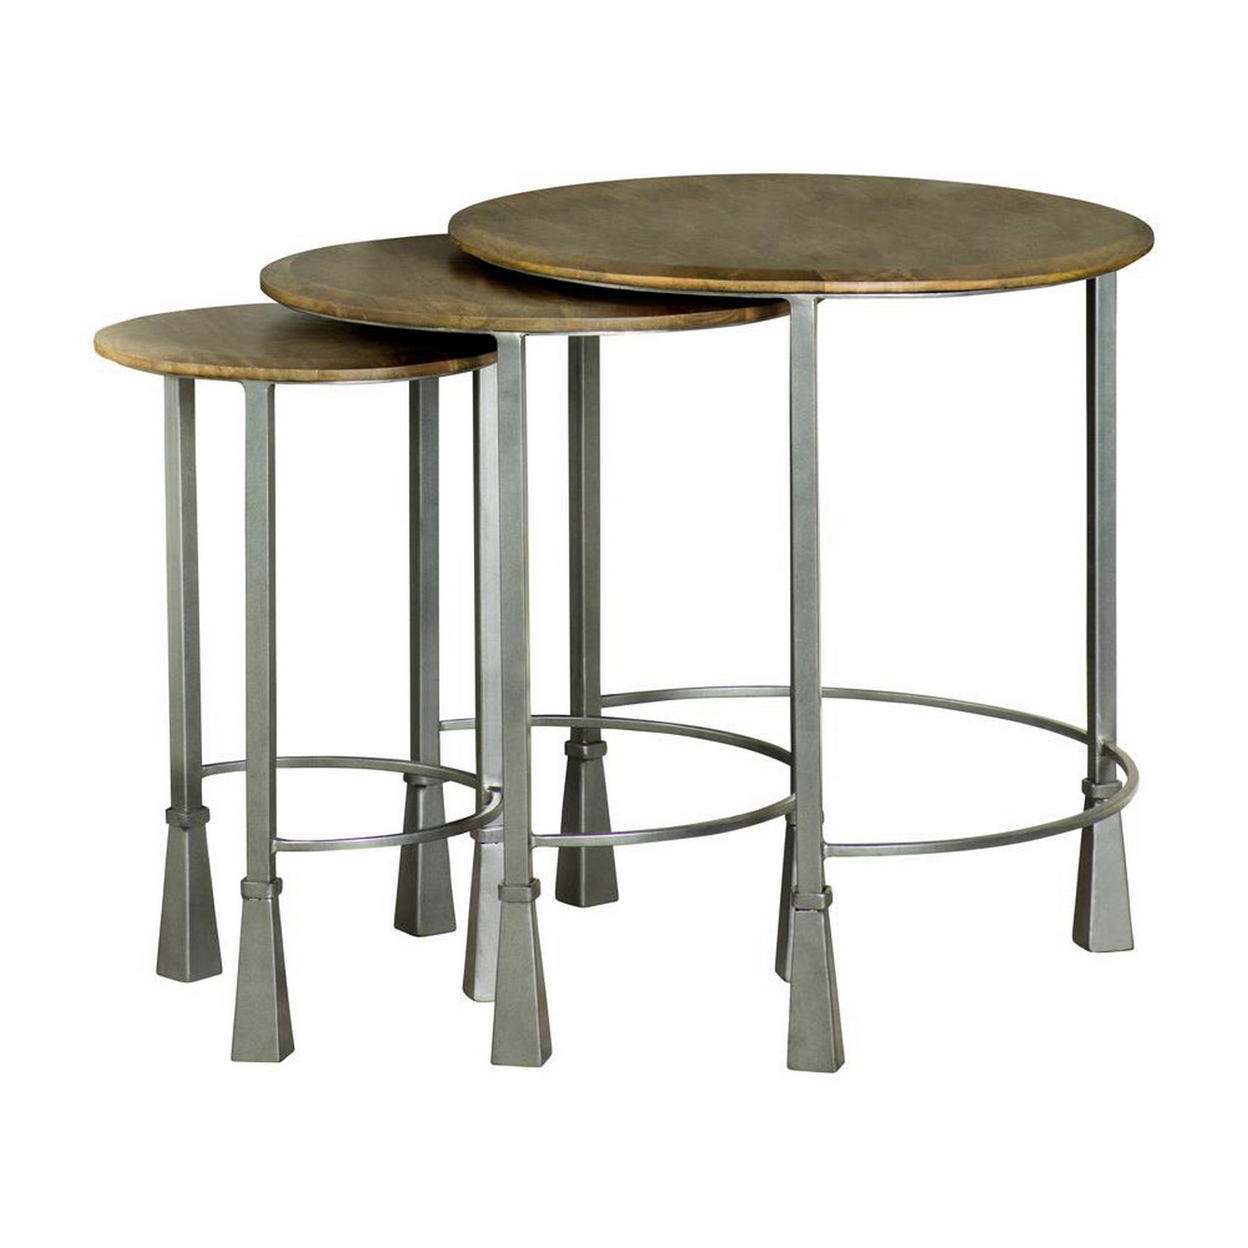 3 Piece Round Nesting End Table Set, Sleek Gray Iron Legs, Mango Brown Wood- Saltoro Sherpi